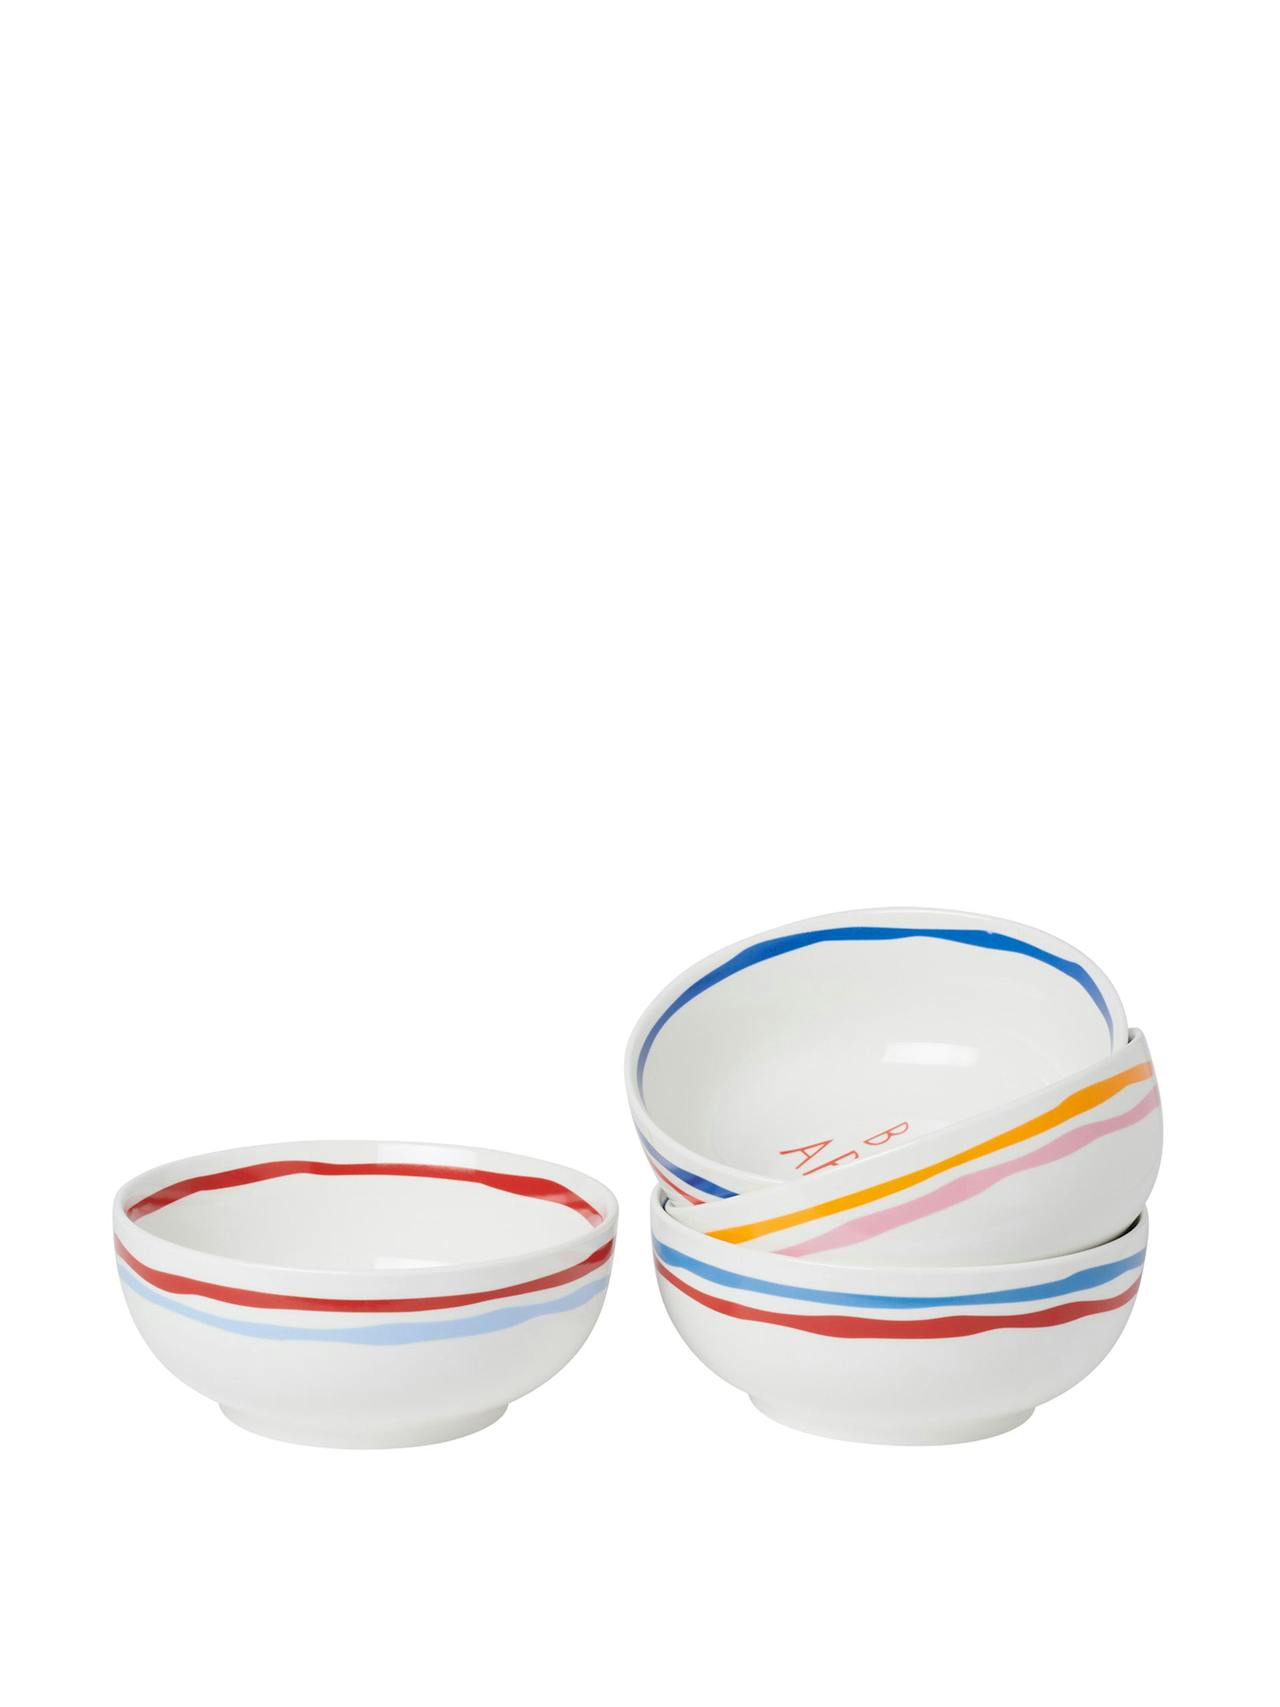 Red italian bowls, set of 4